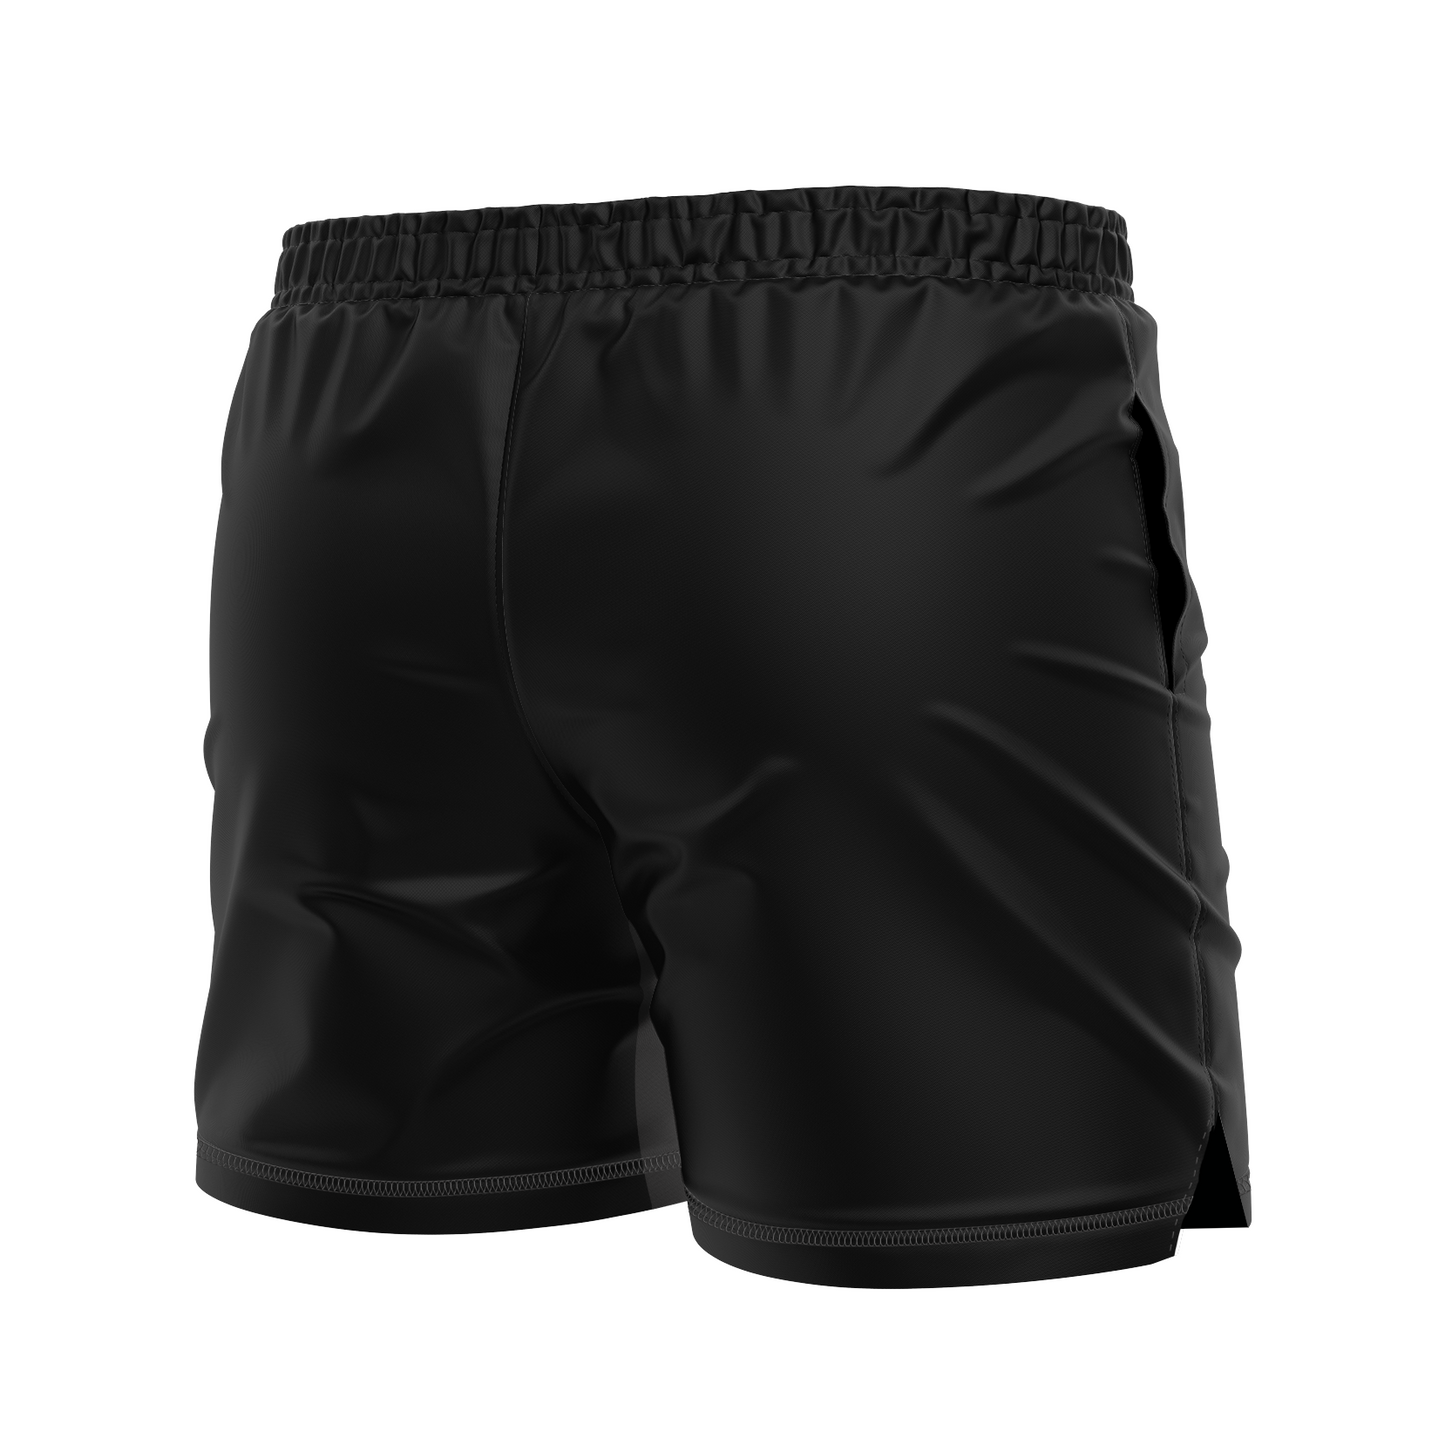 Death by Wristlock: Marfa Lights men's FC shorts, black